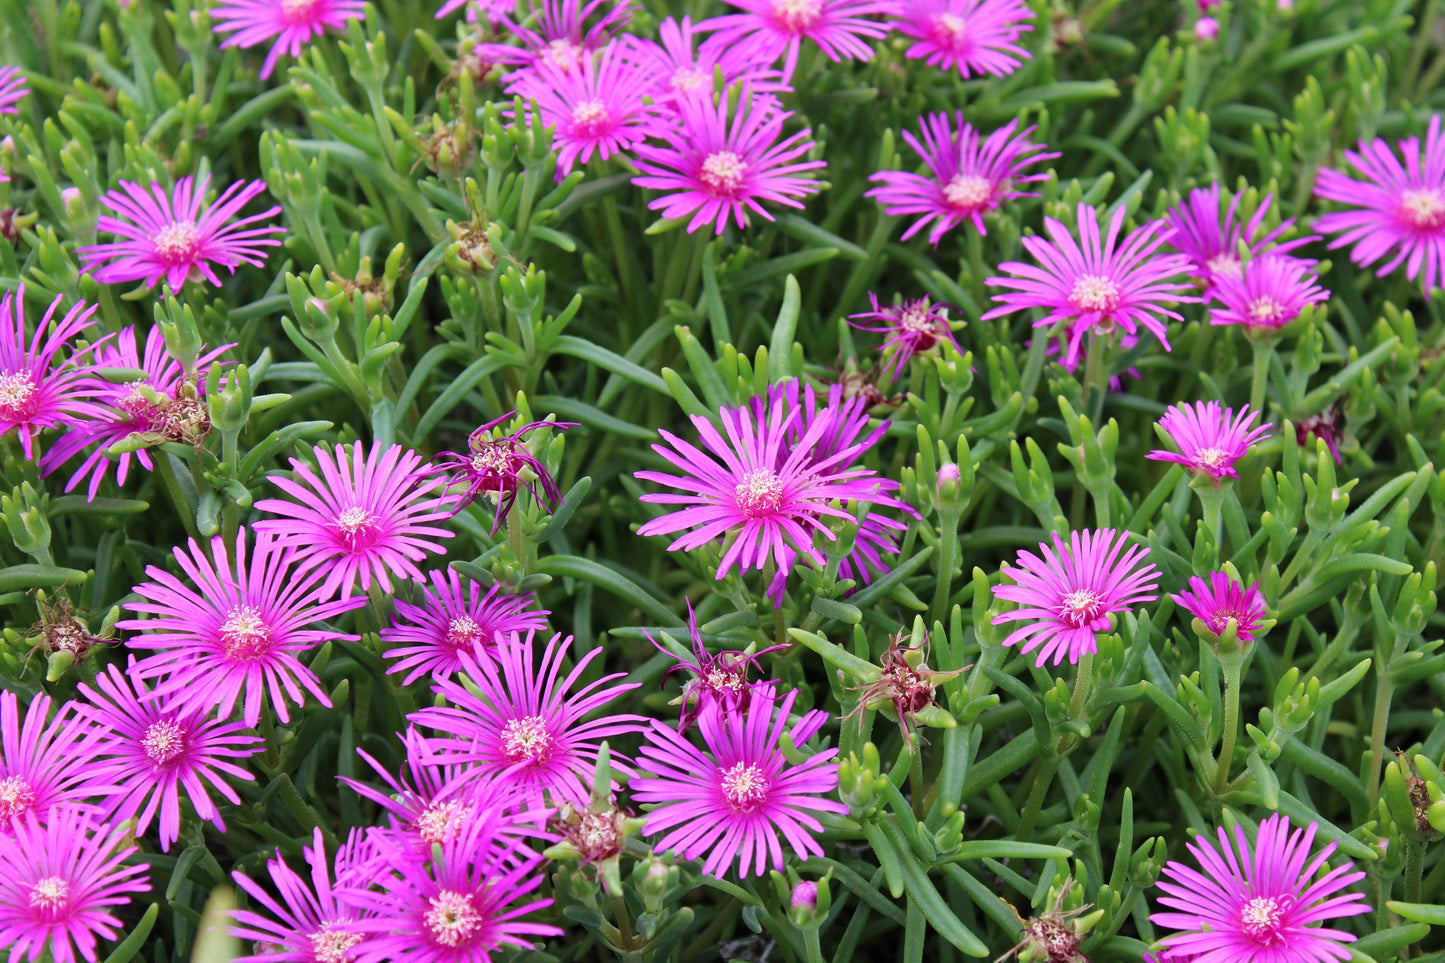 25 Table Mountain ICE PLANT Magenta Fuchsia Delosperma Cooperi Hardy Pink Carpet Flower Seeds